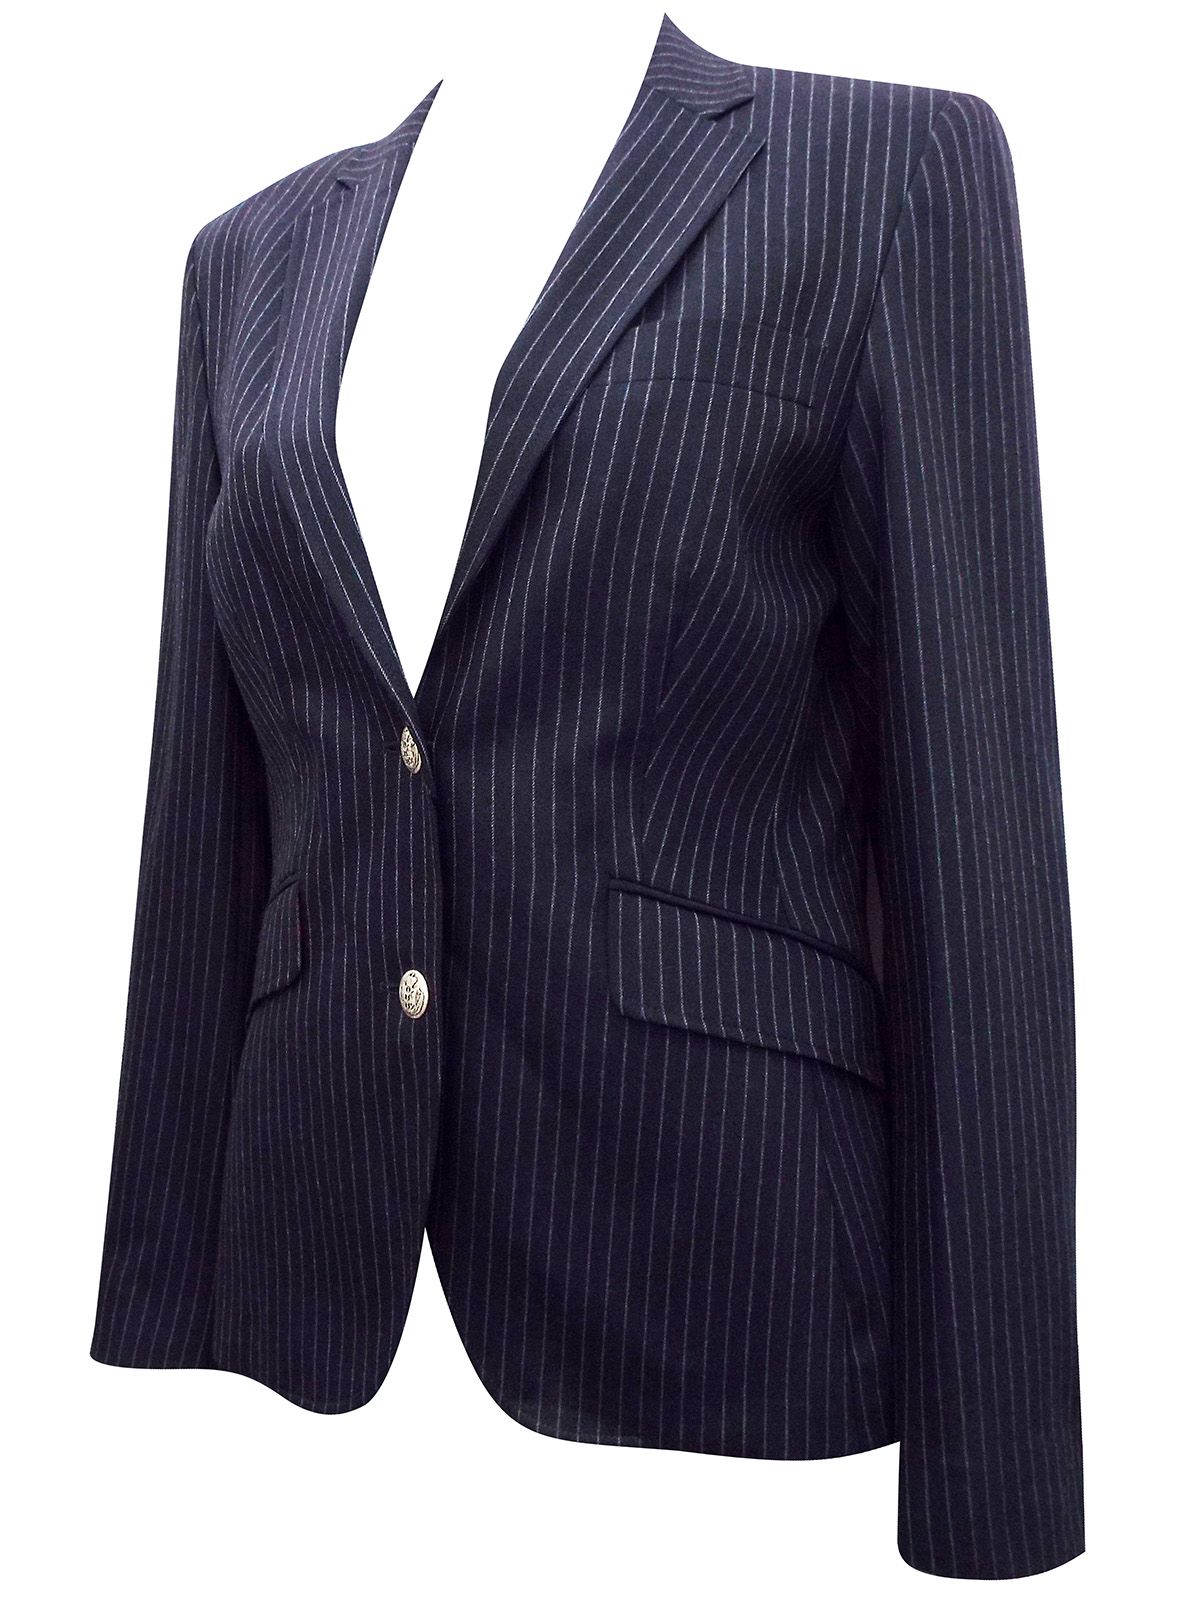 Turo Tailor - - Turo Tailor BLACK Wool Blend Elbow Patch Striped Blazer ...